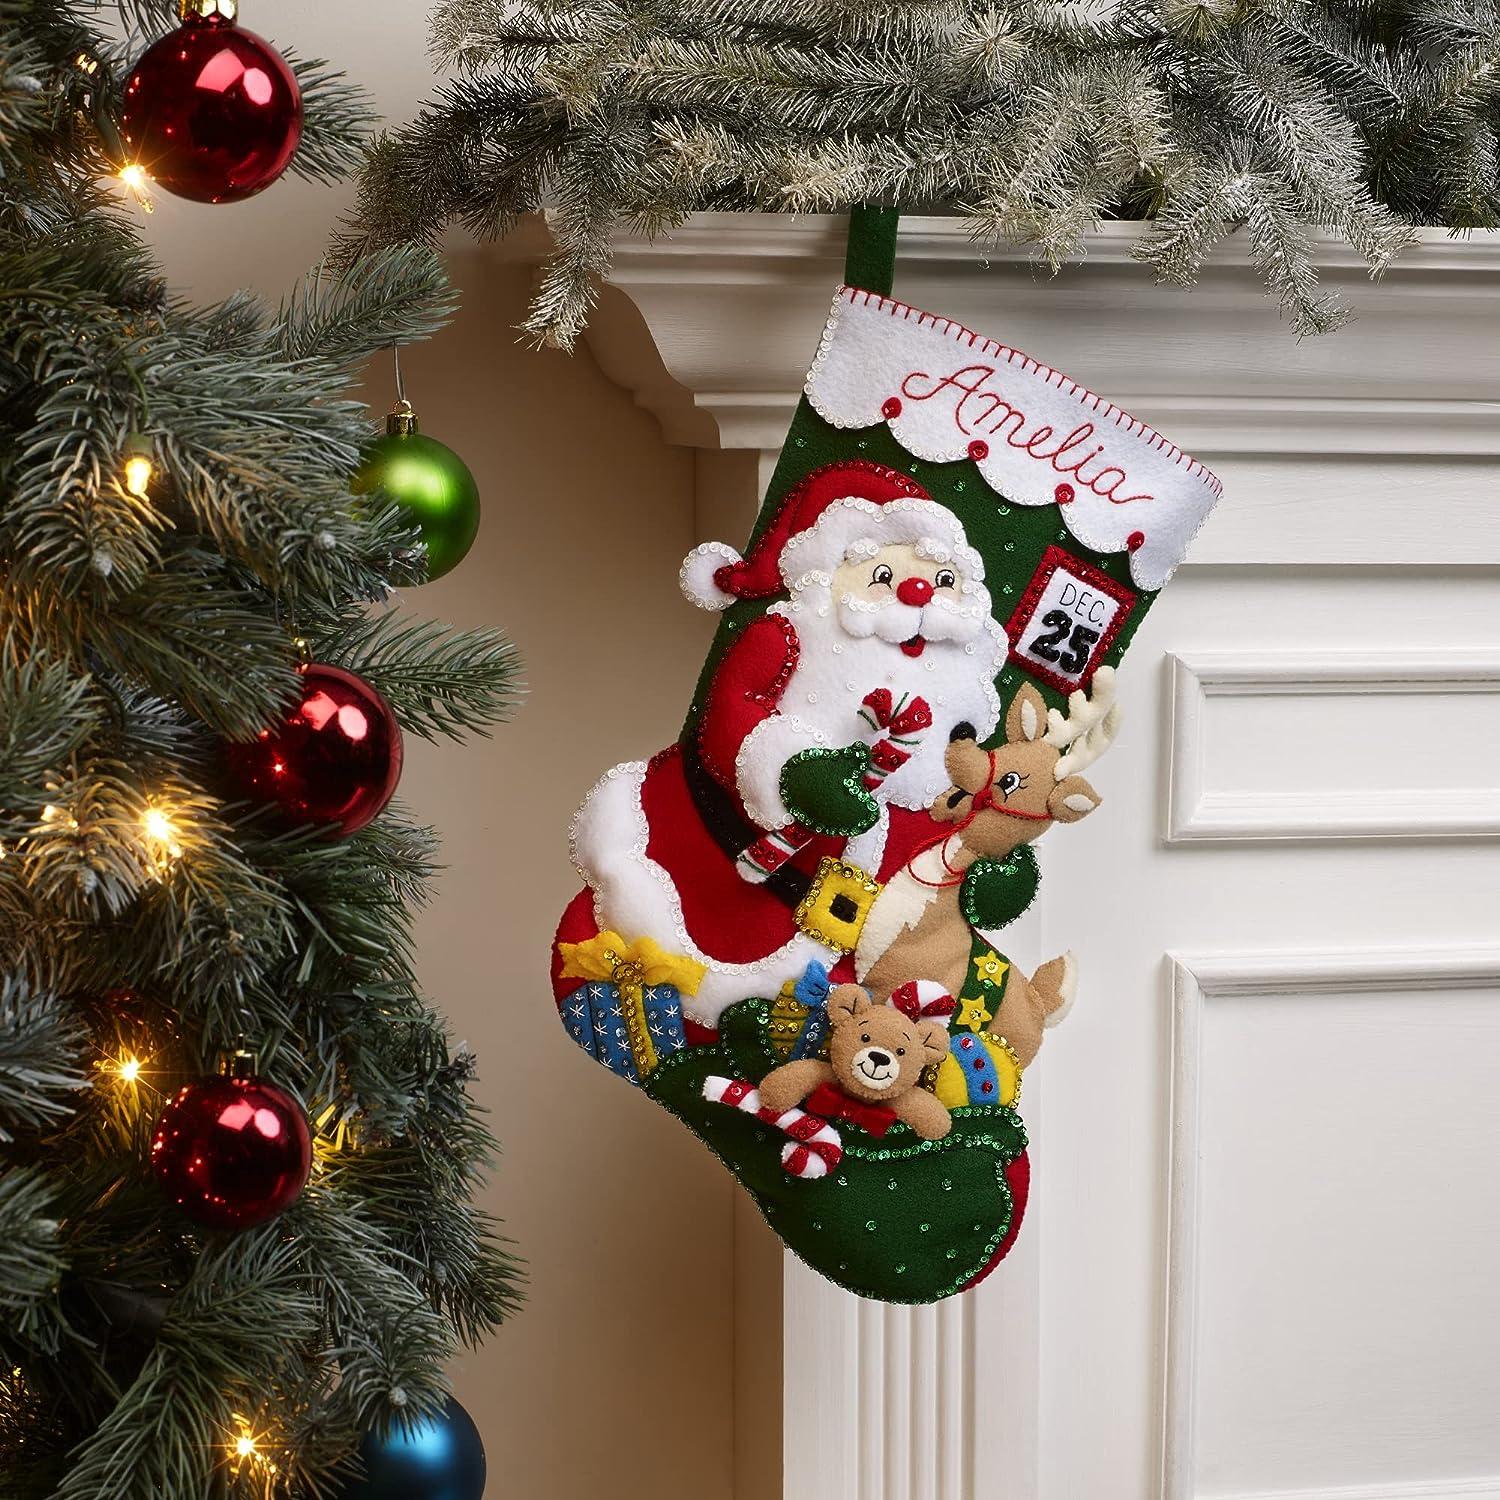 Design Works Santa's Gifts Stocking Kit